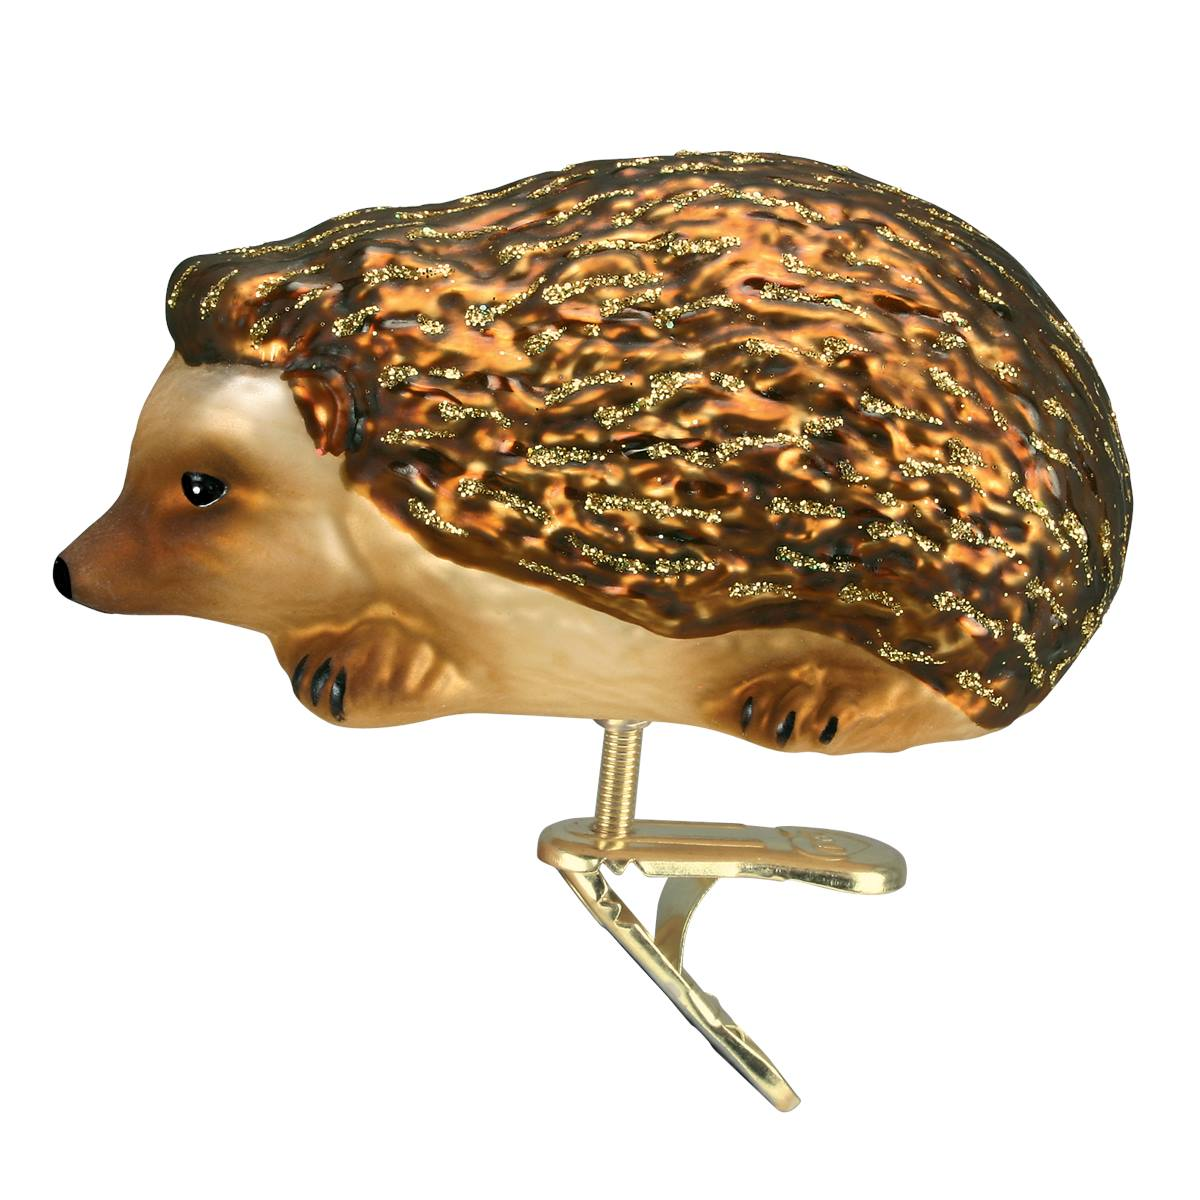 Clip-On Hedgehog Ornament